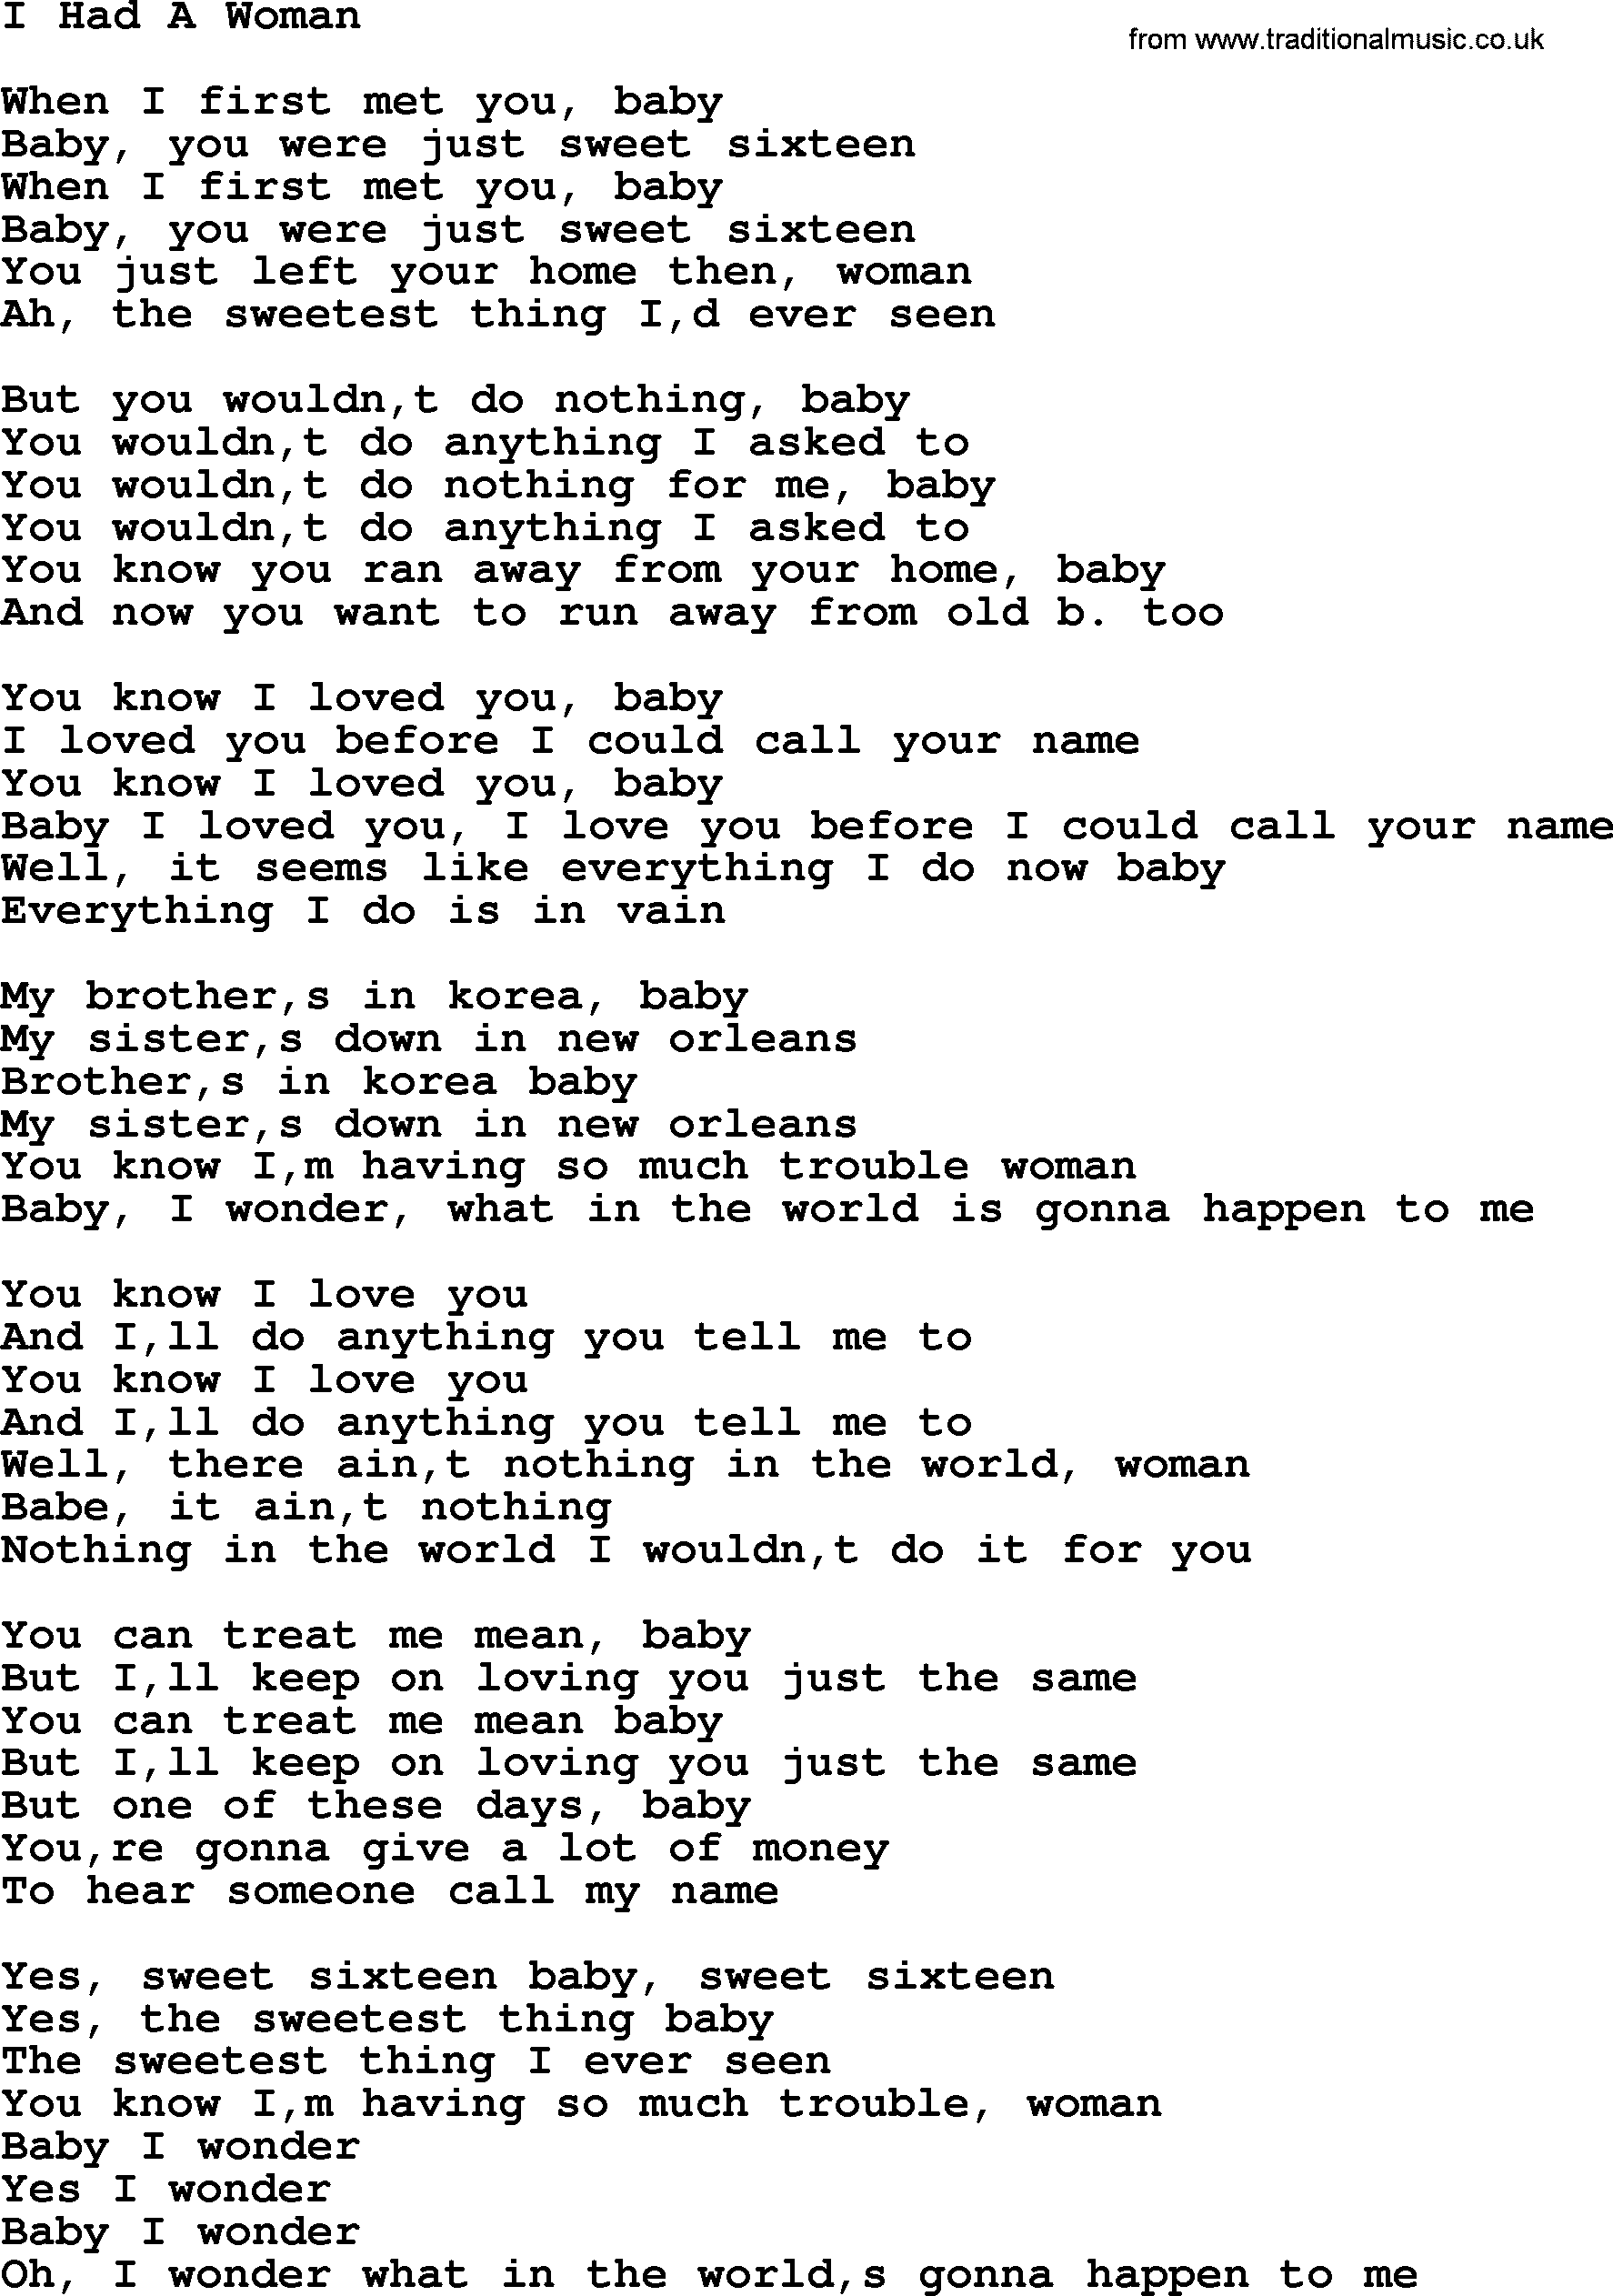 The Byrds song I Had A Woman, lyrics